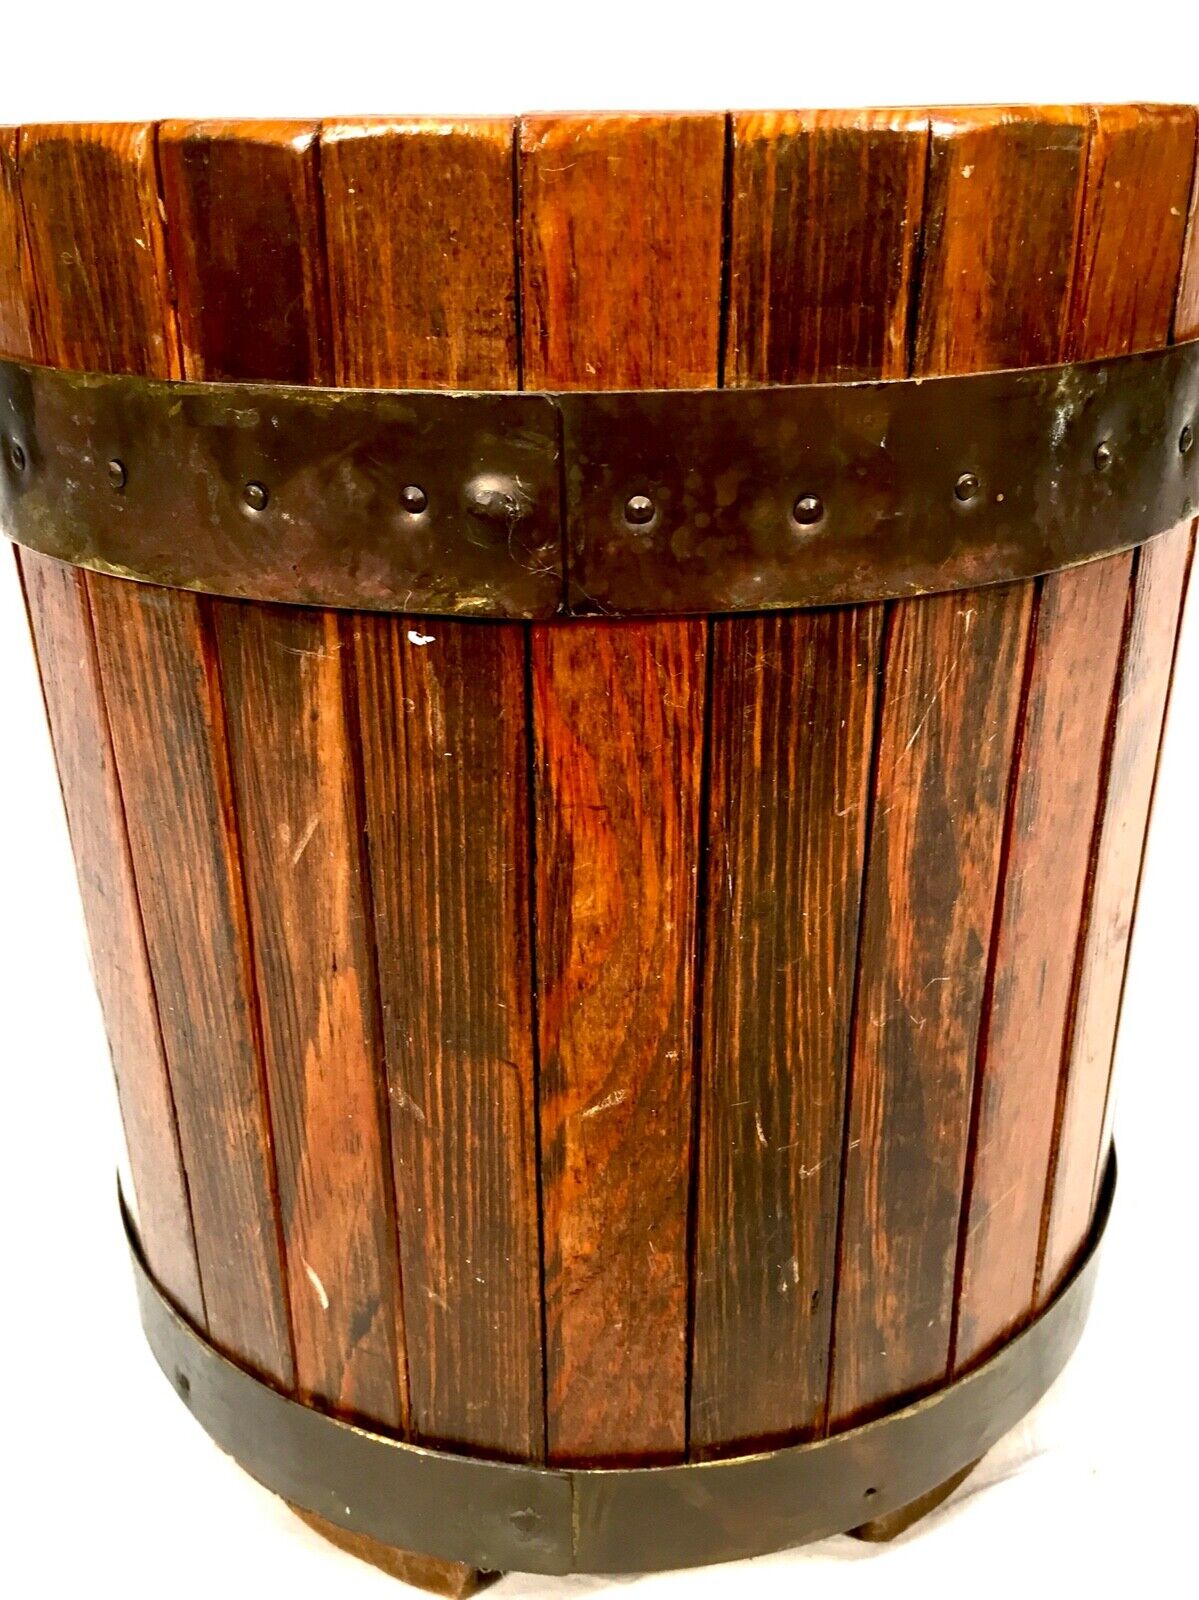 Antique Wooden Pine & Brass Bound Planter / Plant Pot / Bucket / Rustic Log Bin